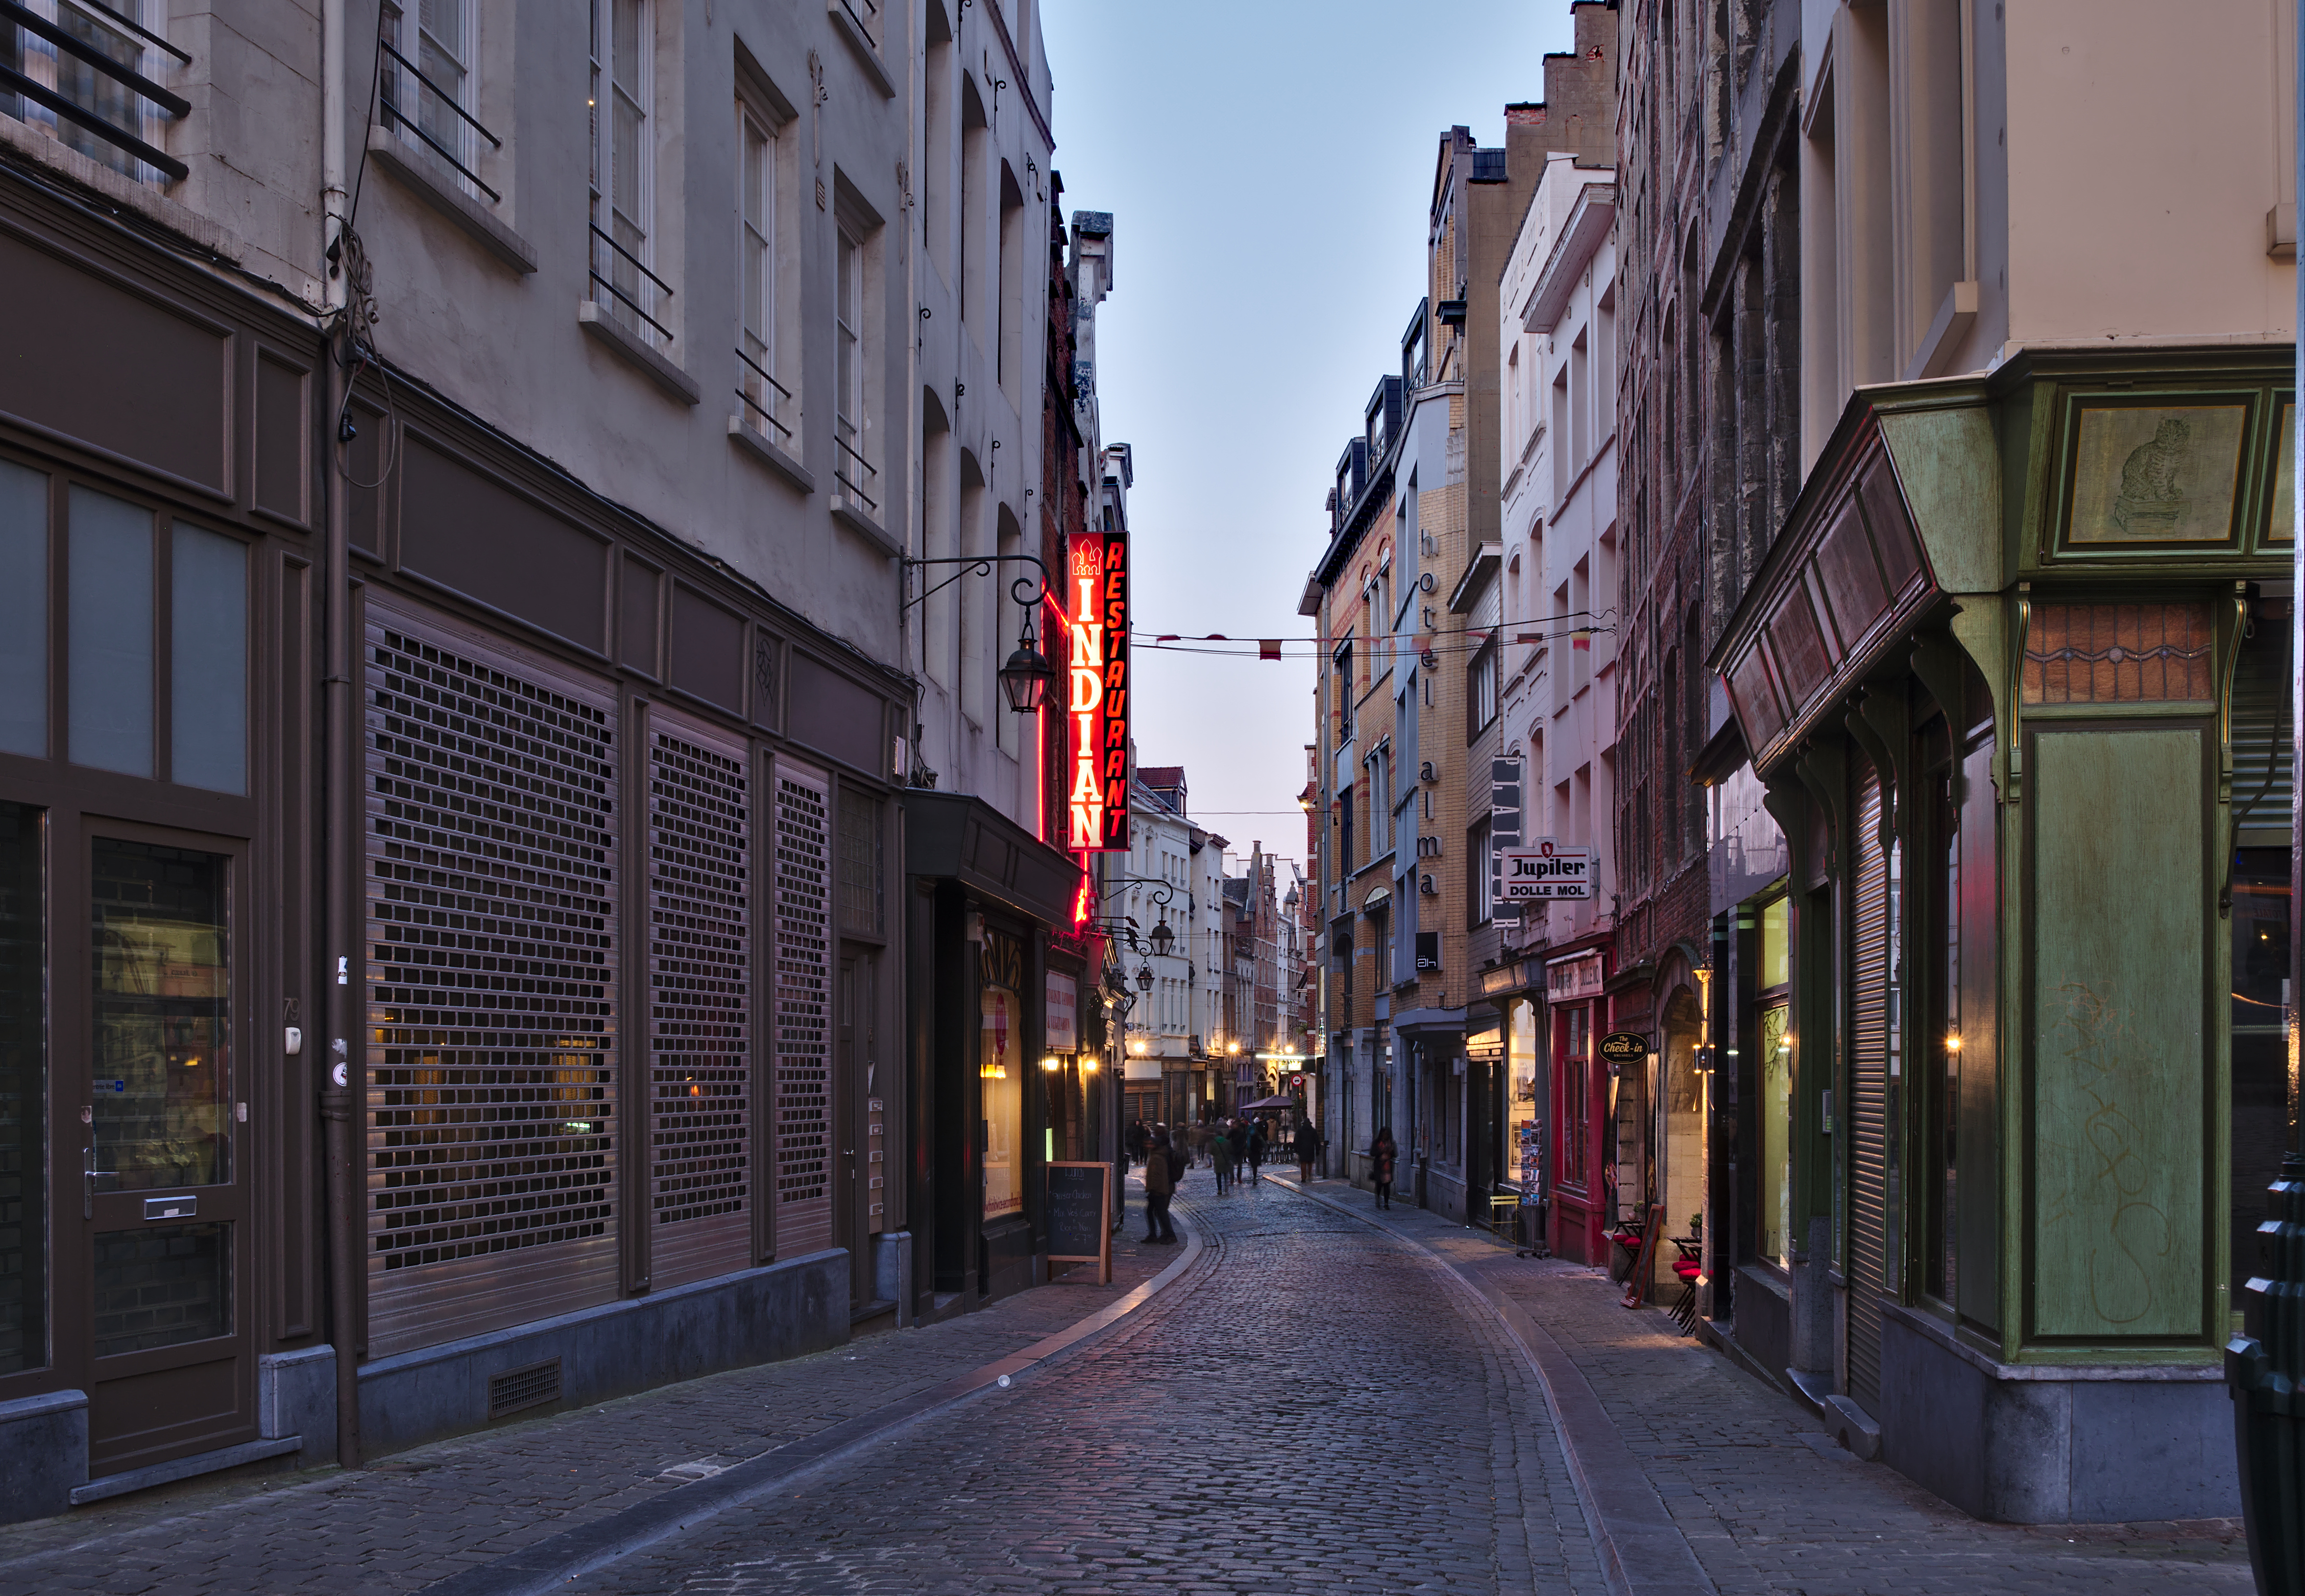 Rue de la Violette as seen from Place Saint-Jean during the evening civil twilight in Brussels, Belgium (DSCF4300)